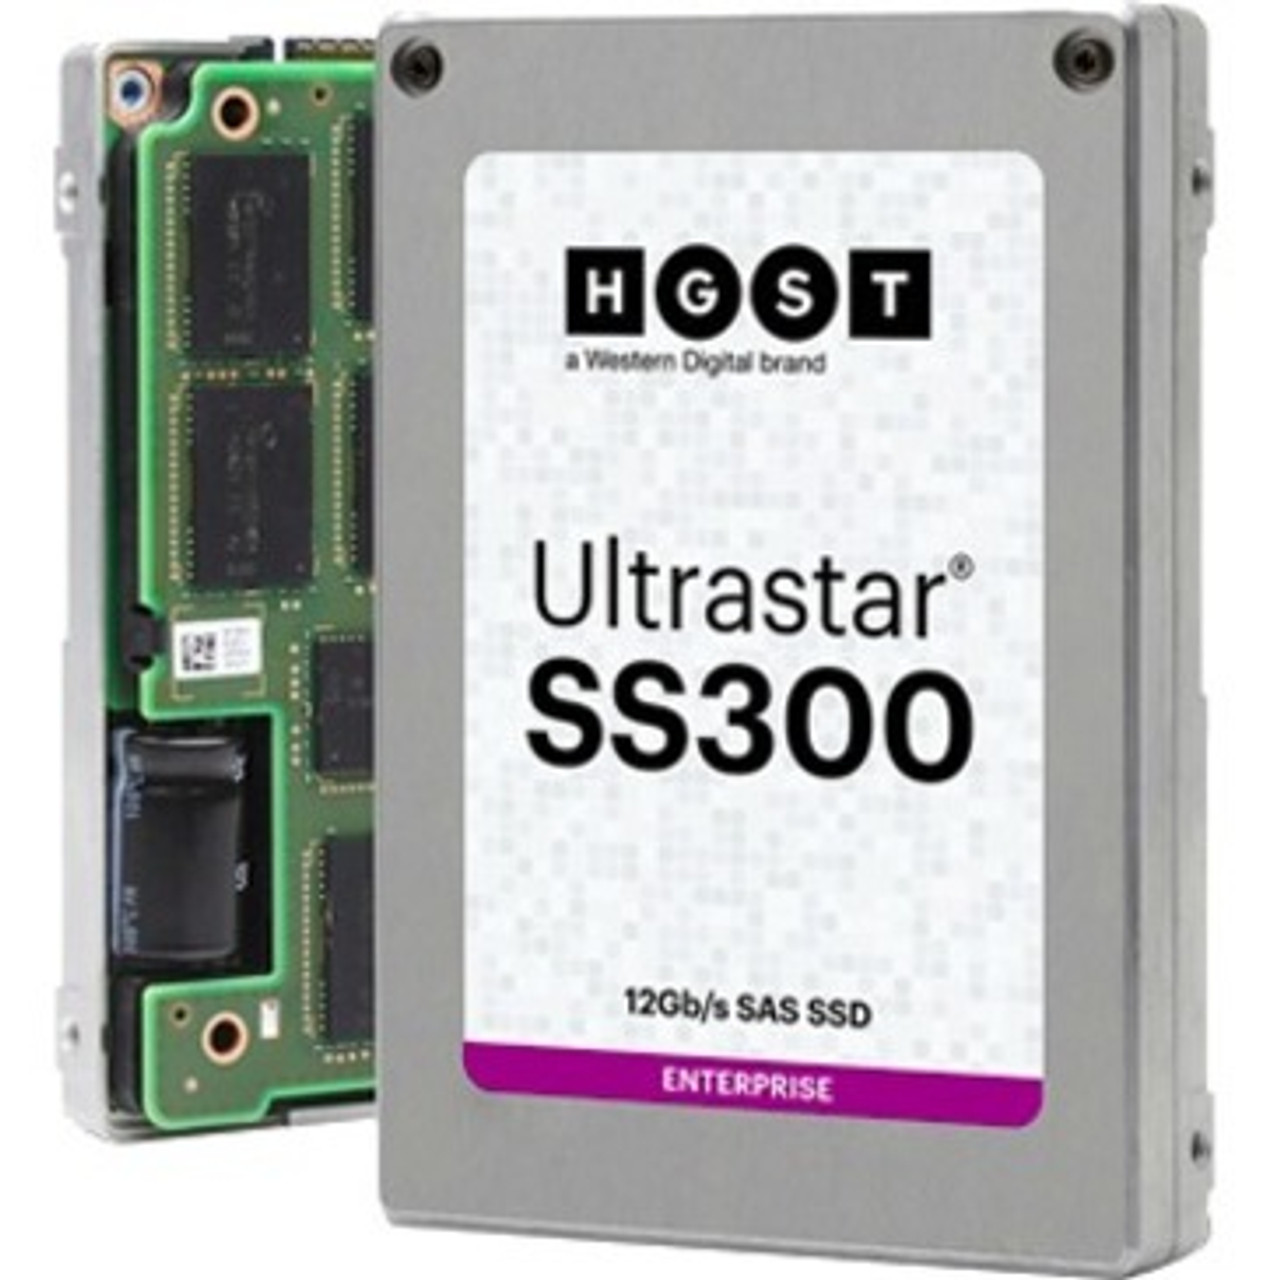 HGST Ultrastar SS300 HUSMM3240ASS200 400 GB Solid State Drive - 2.5" Internal